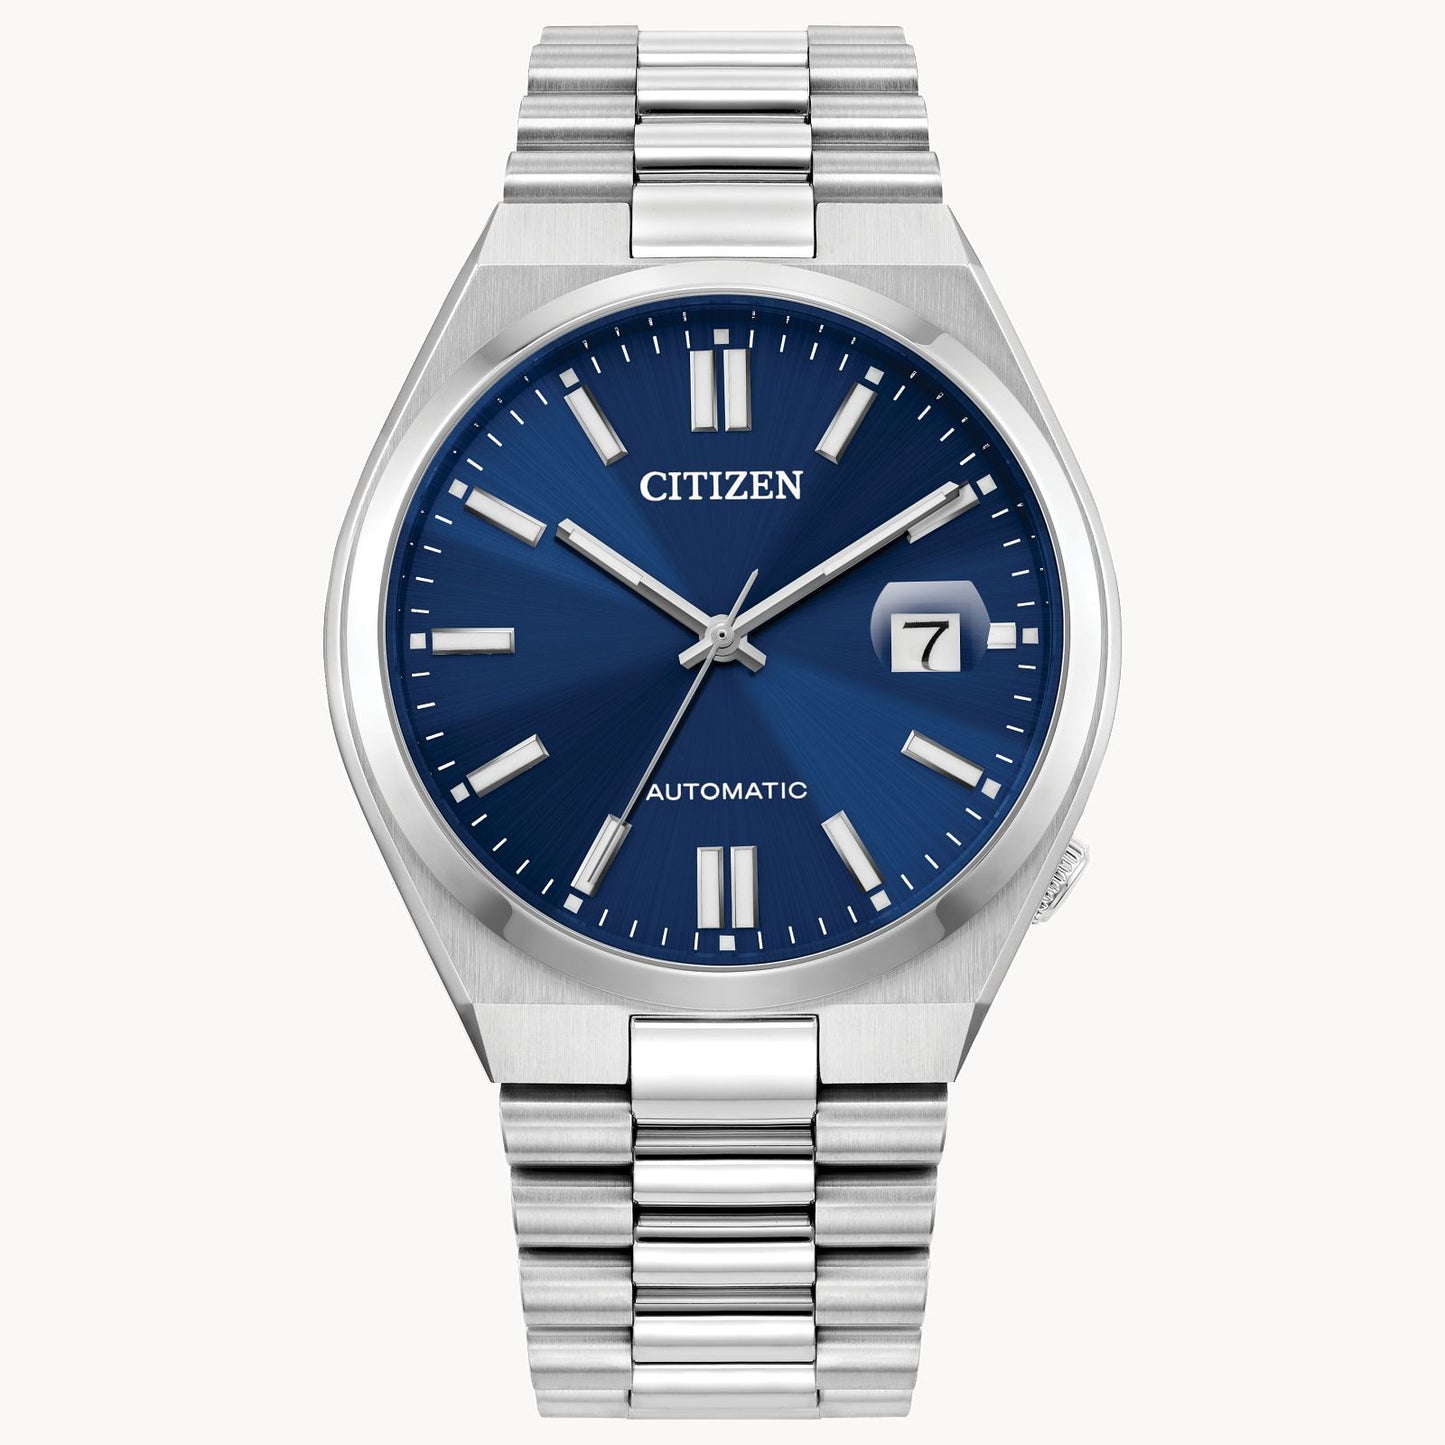 Citizen “TSUYOSA” Collection Blue Dial Watch NJ0150-56L